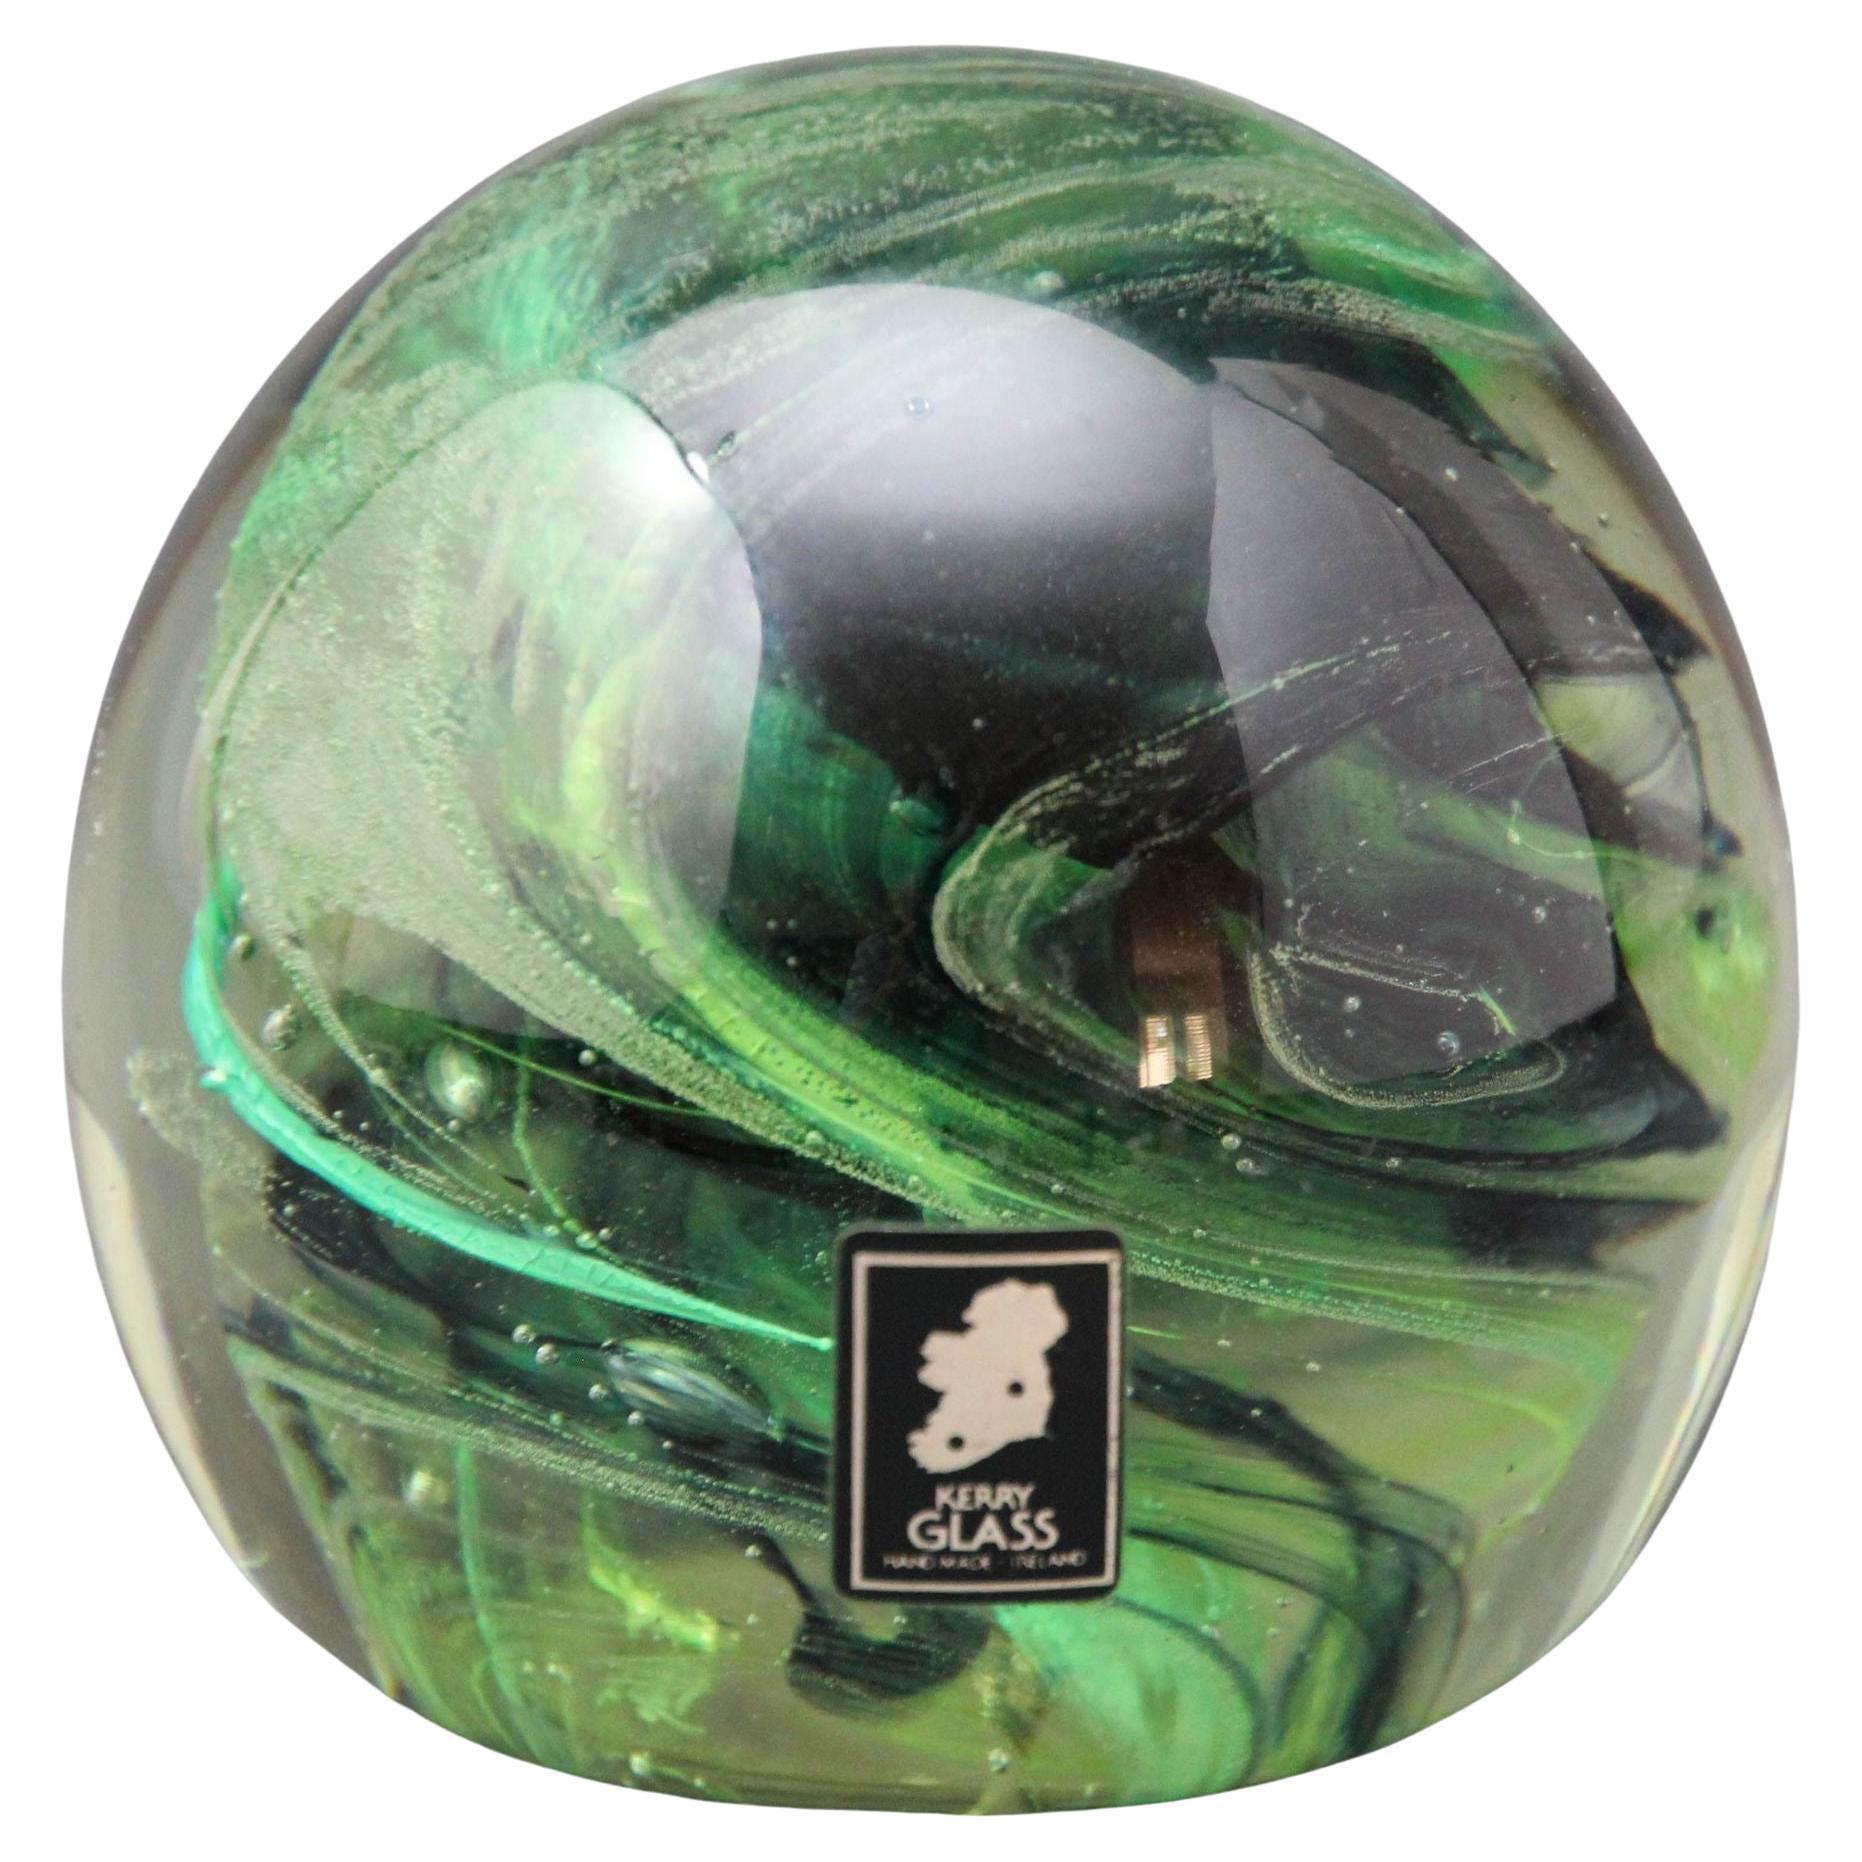 KERRY Irish Art Glass Paperweight Hand Blown in a Jade to Emerald Green 1980s